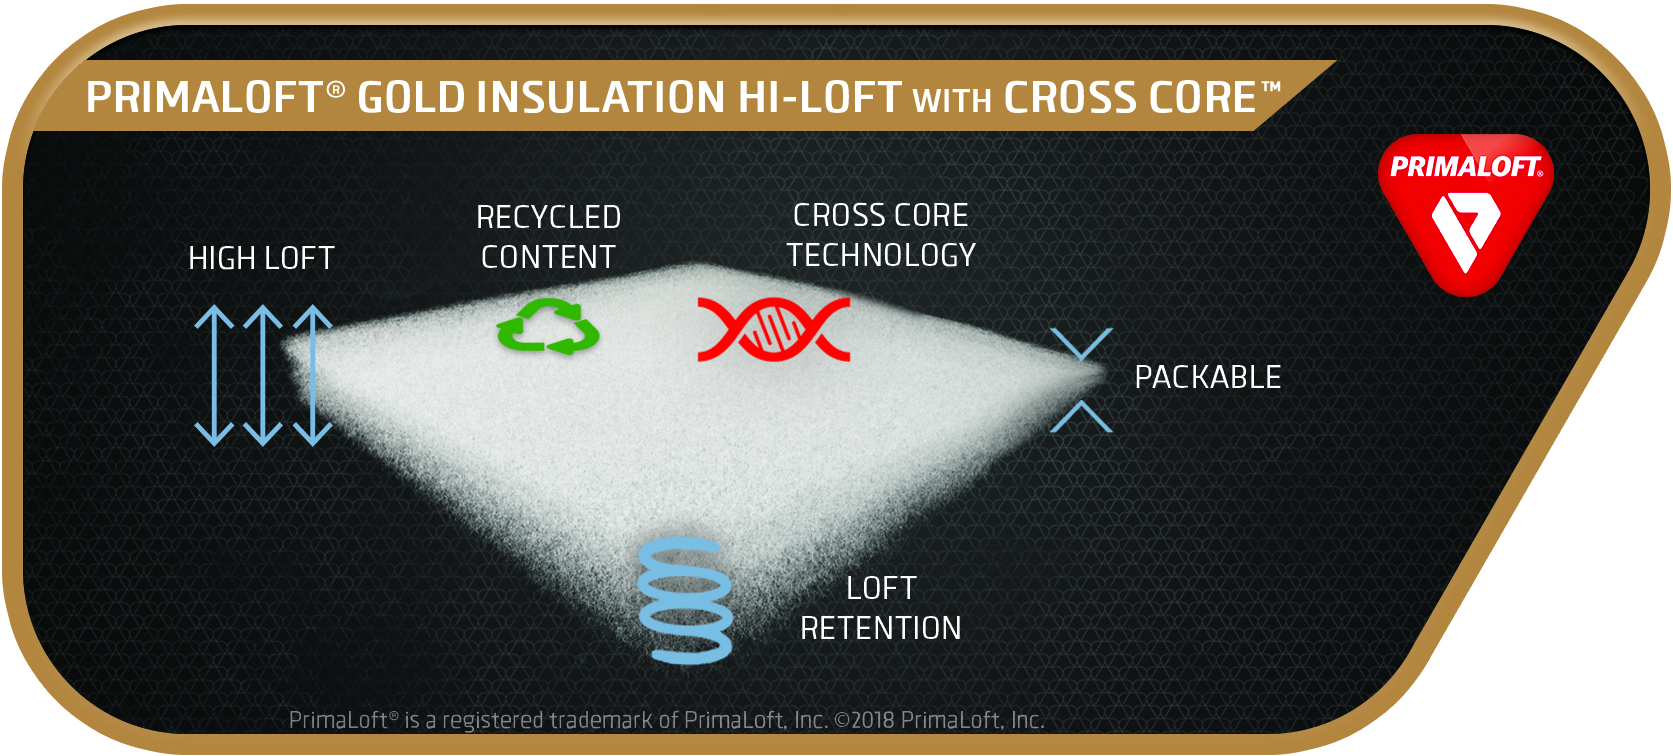 PrimaLoft Gold Insulation Hi-Loft Ultra with Cross Core. © PrimaLoft.